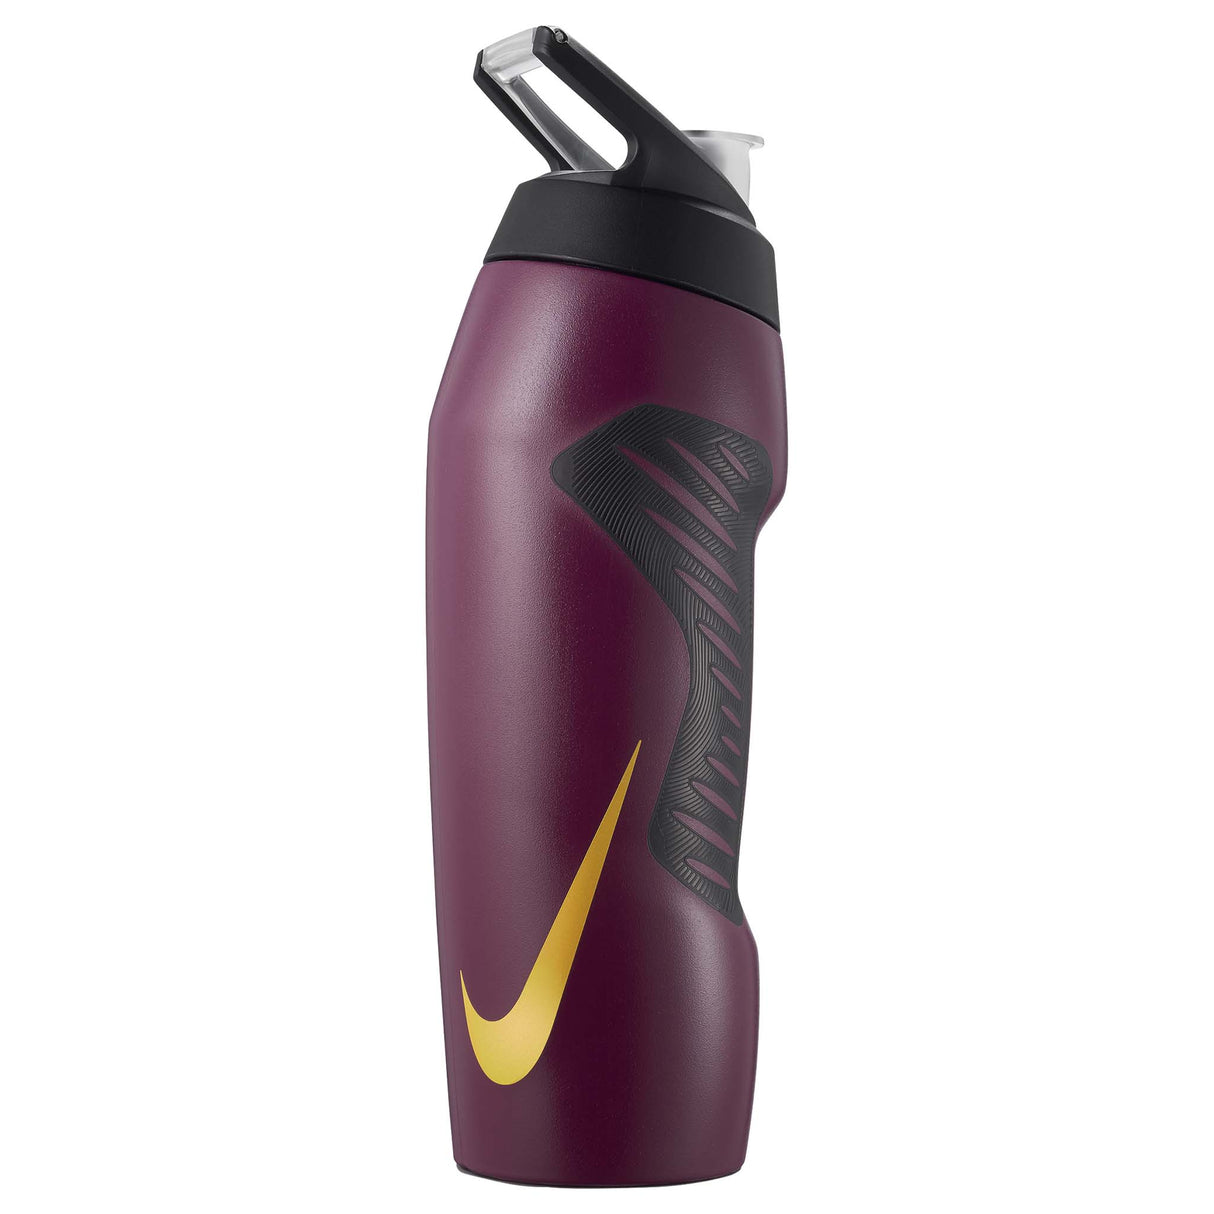 Nike Hyperfuel 2.0 32 oz bouteille d'eau sport refermable -Sangria / Black / Black / Metallic gold